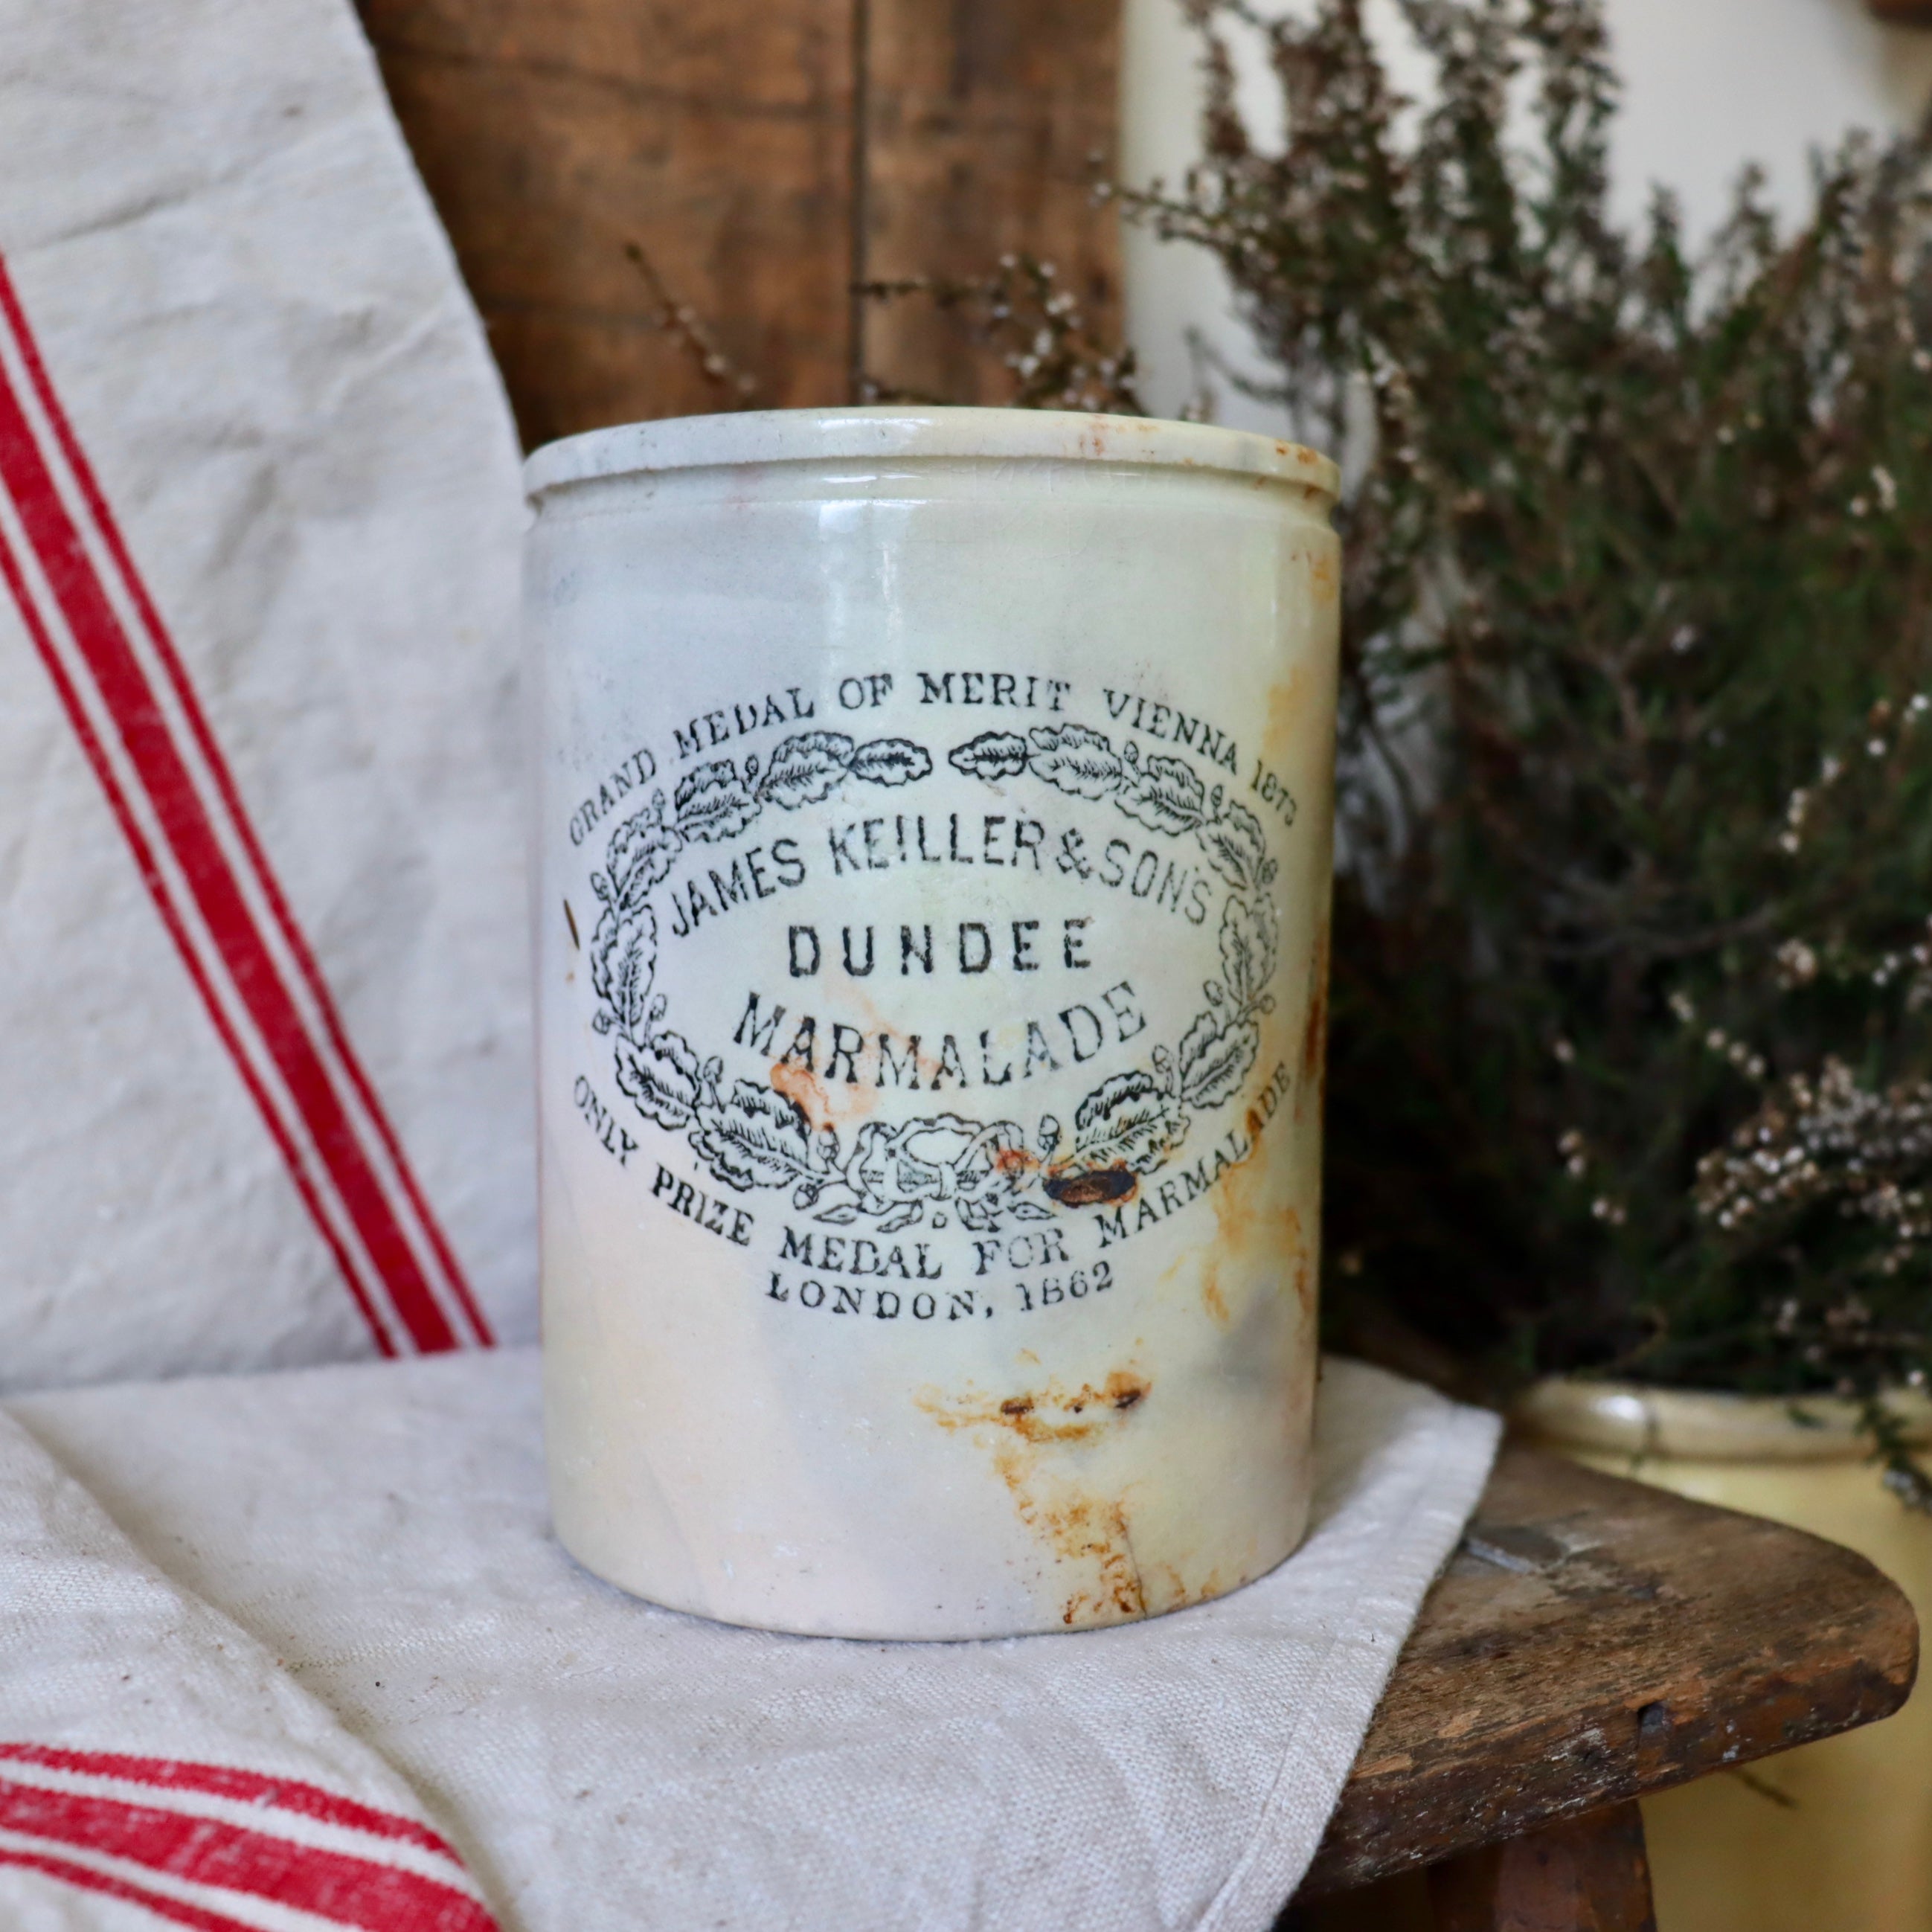 James Keiller & Son's Dundee 2lb Marmalade Pot